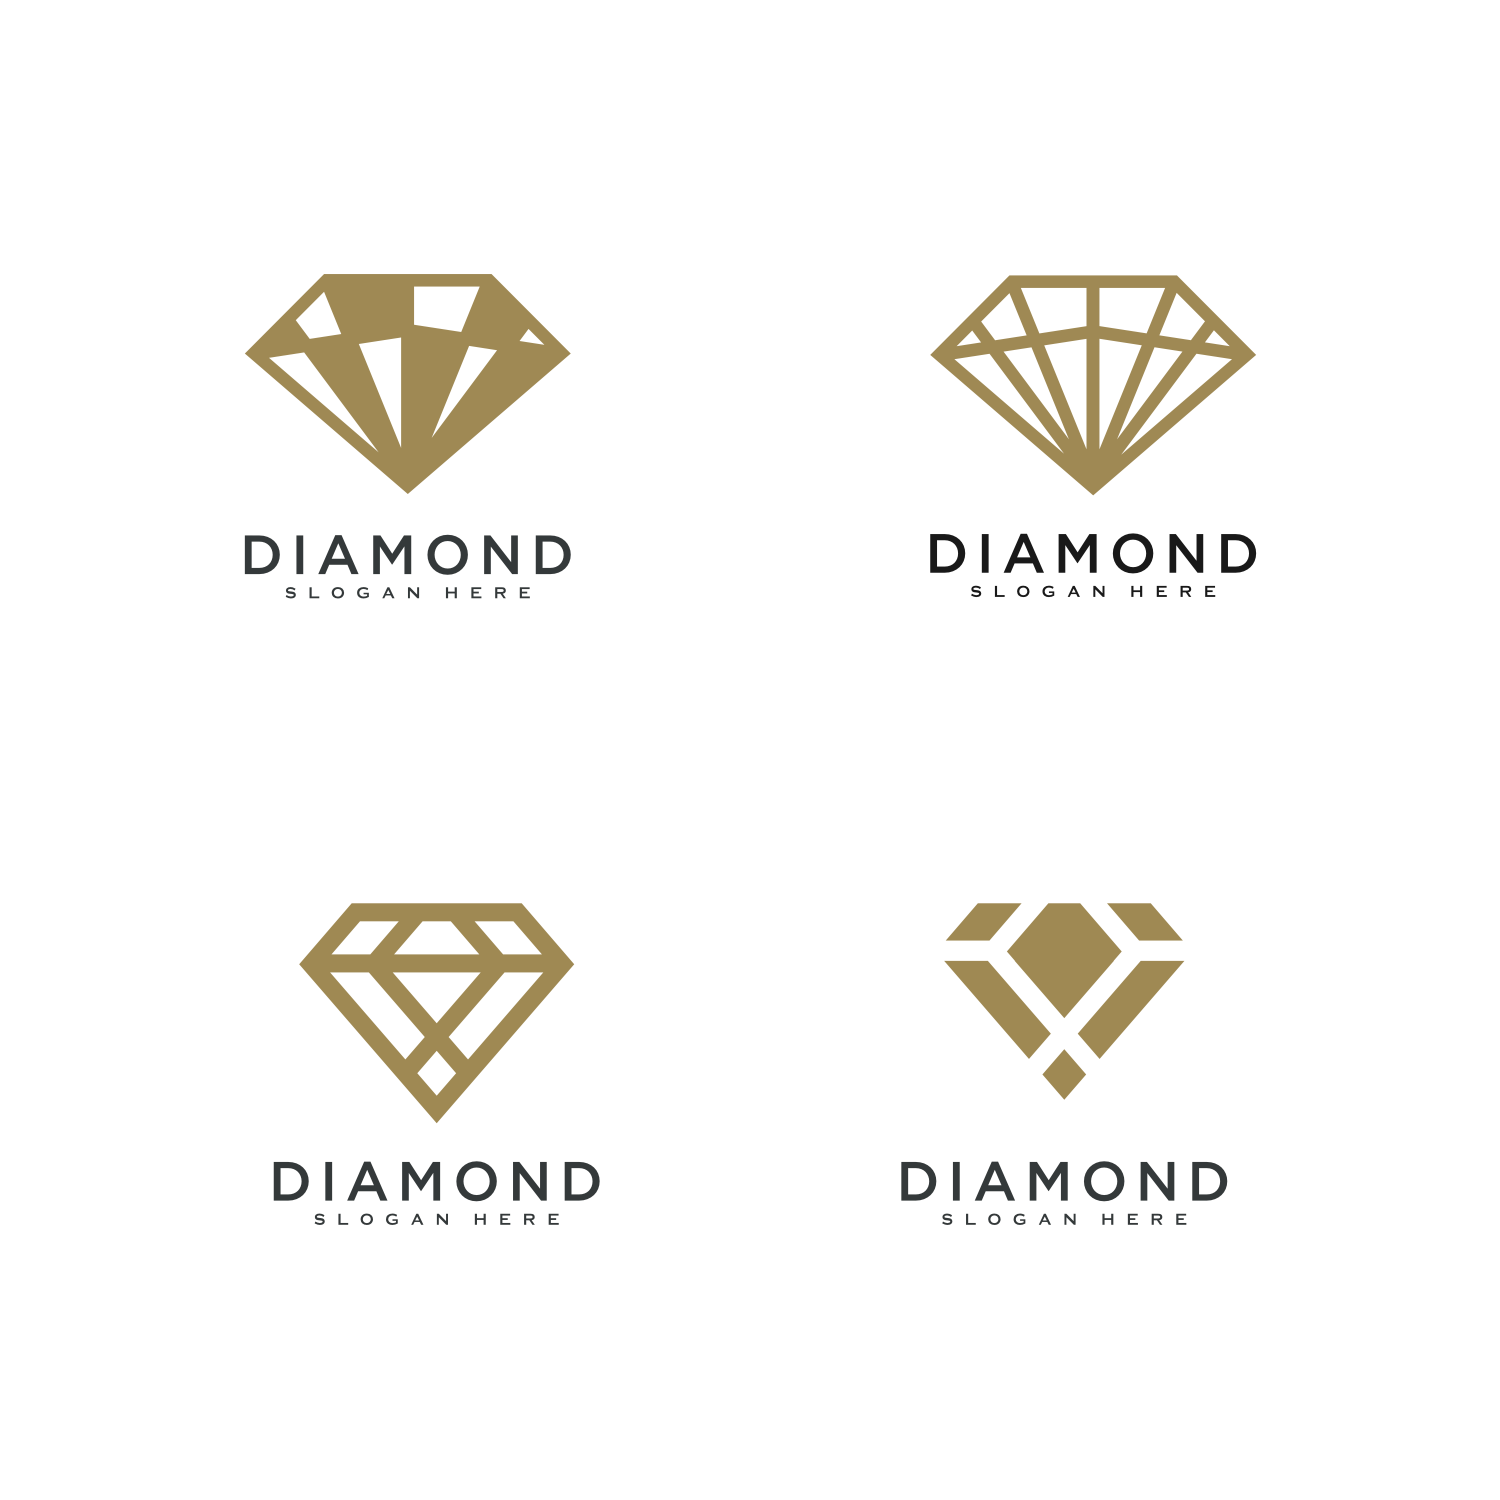 Diamond Logo Vector Design Template cover image.